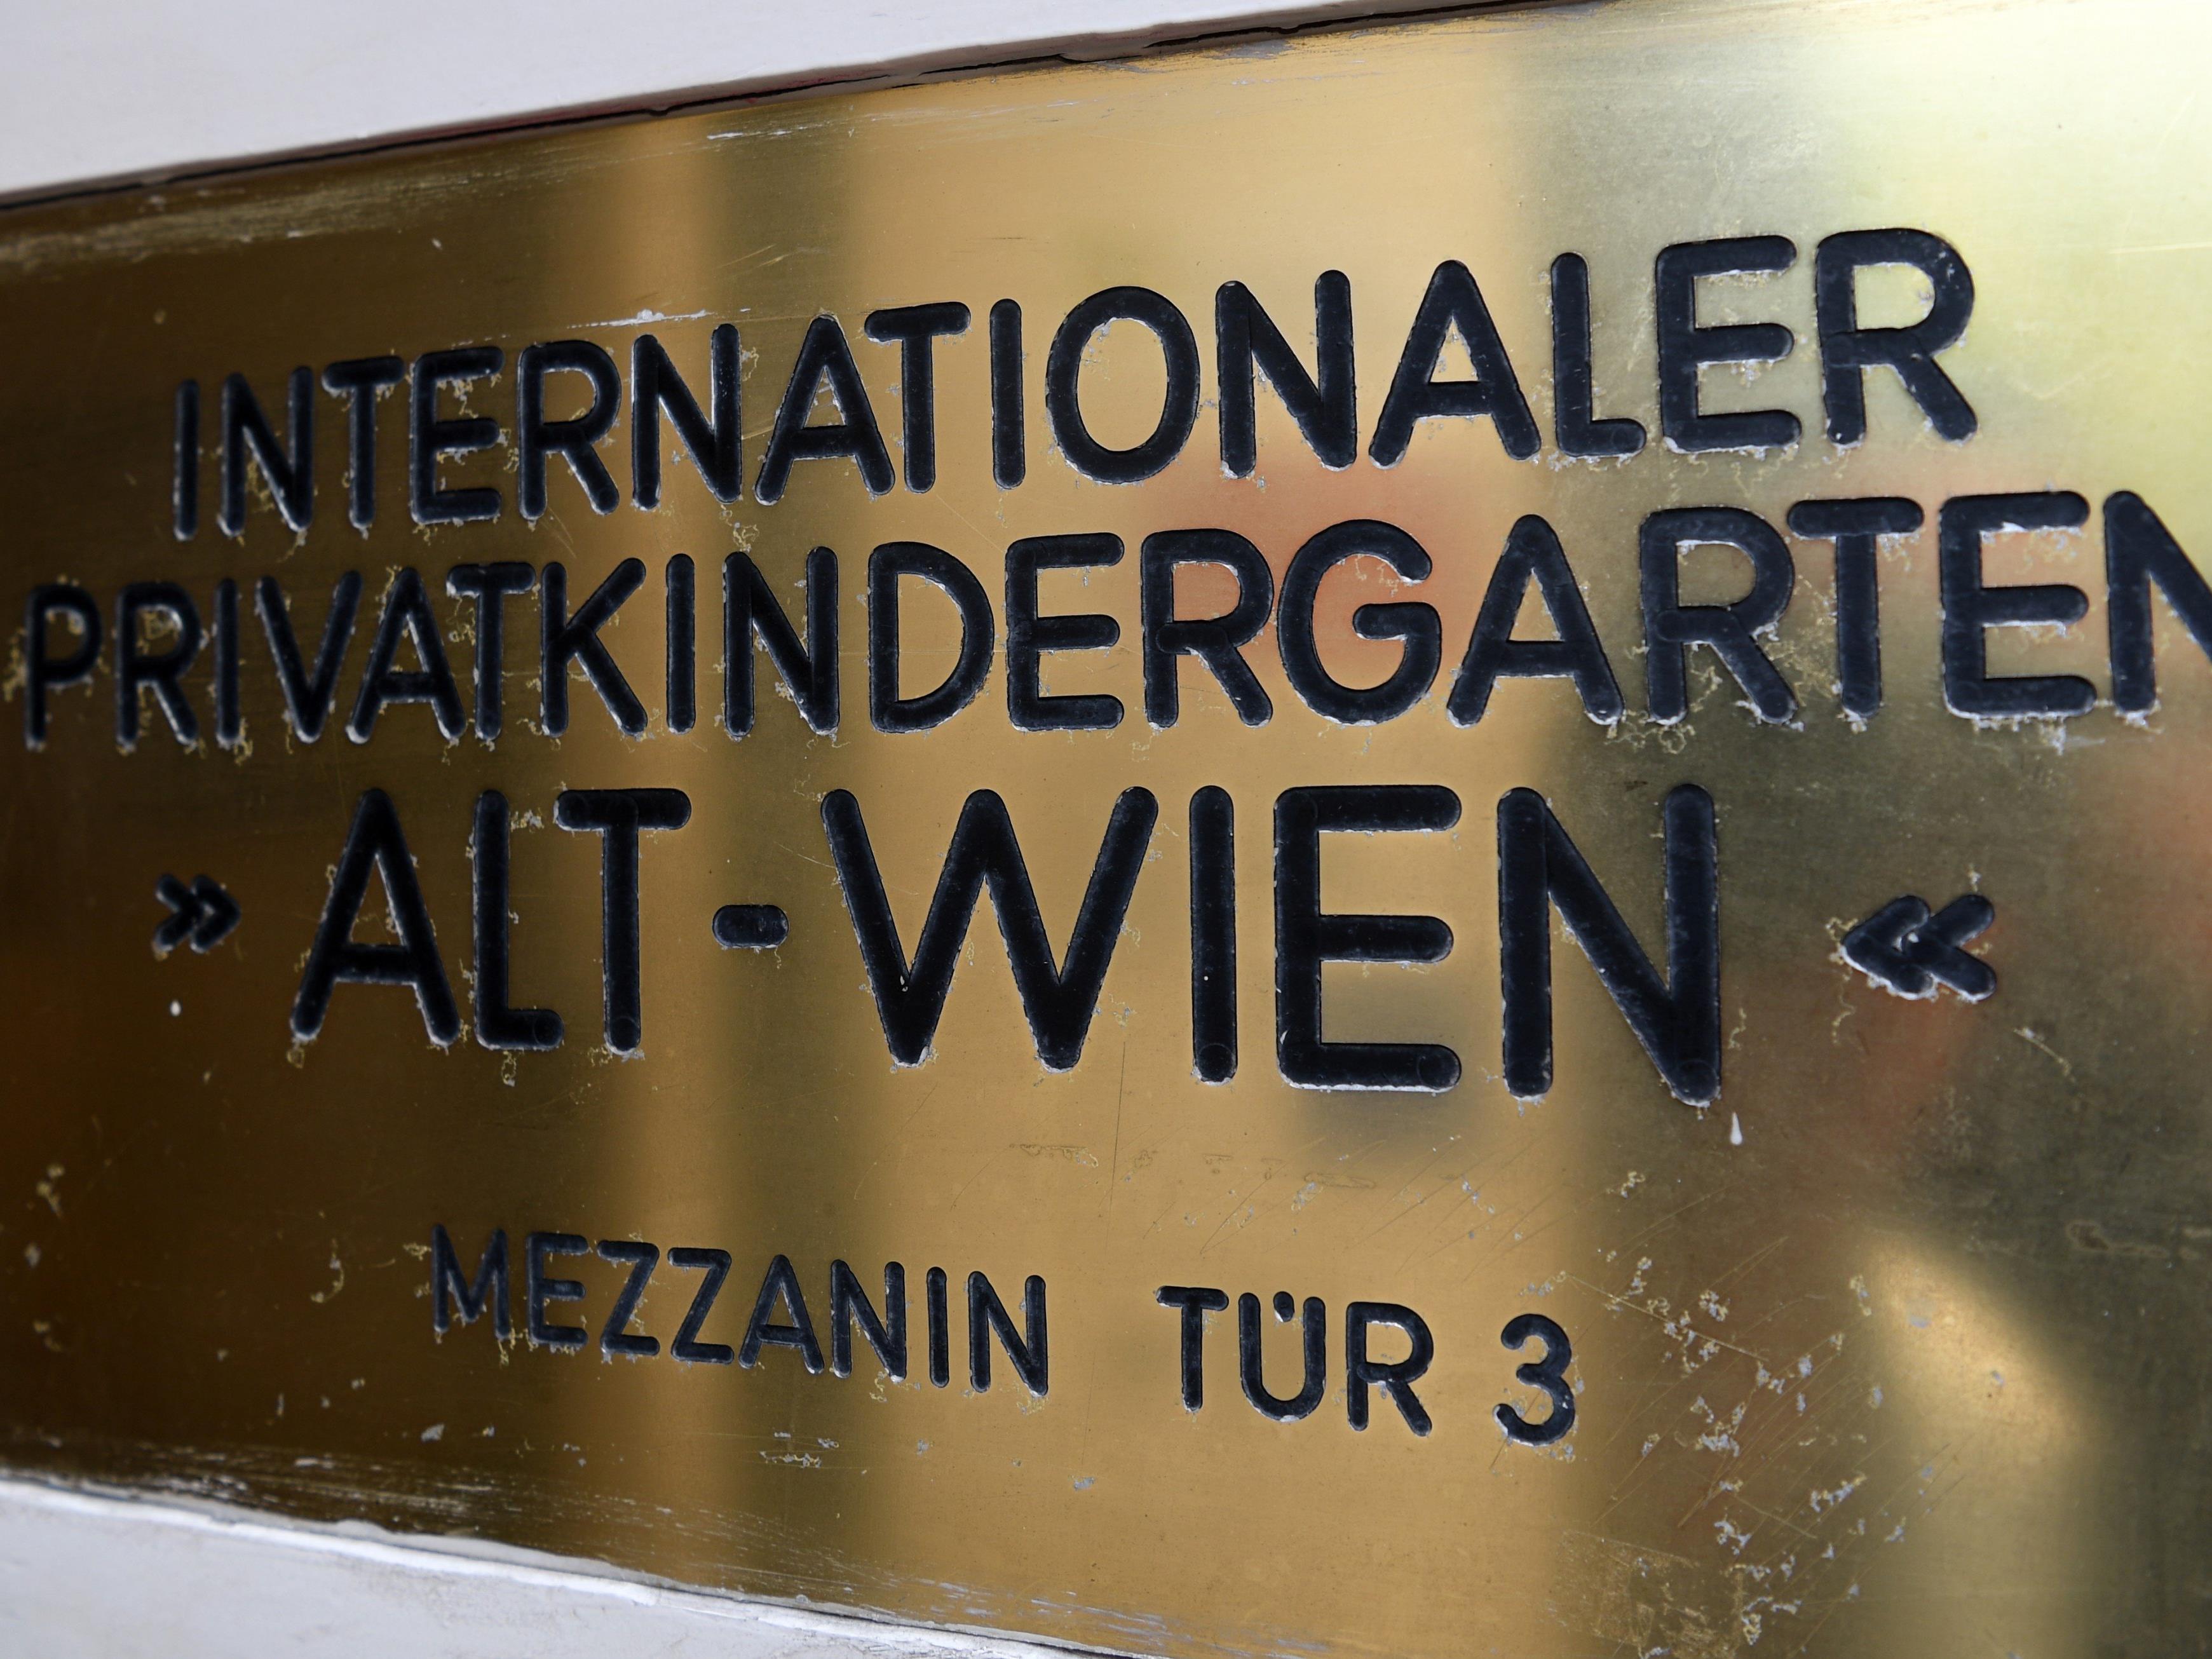 25 "Alt-Wien" Kindergärten wurden bereits verkauft